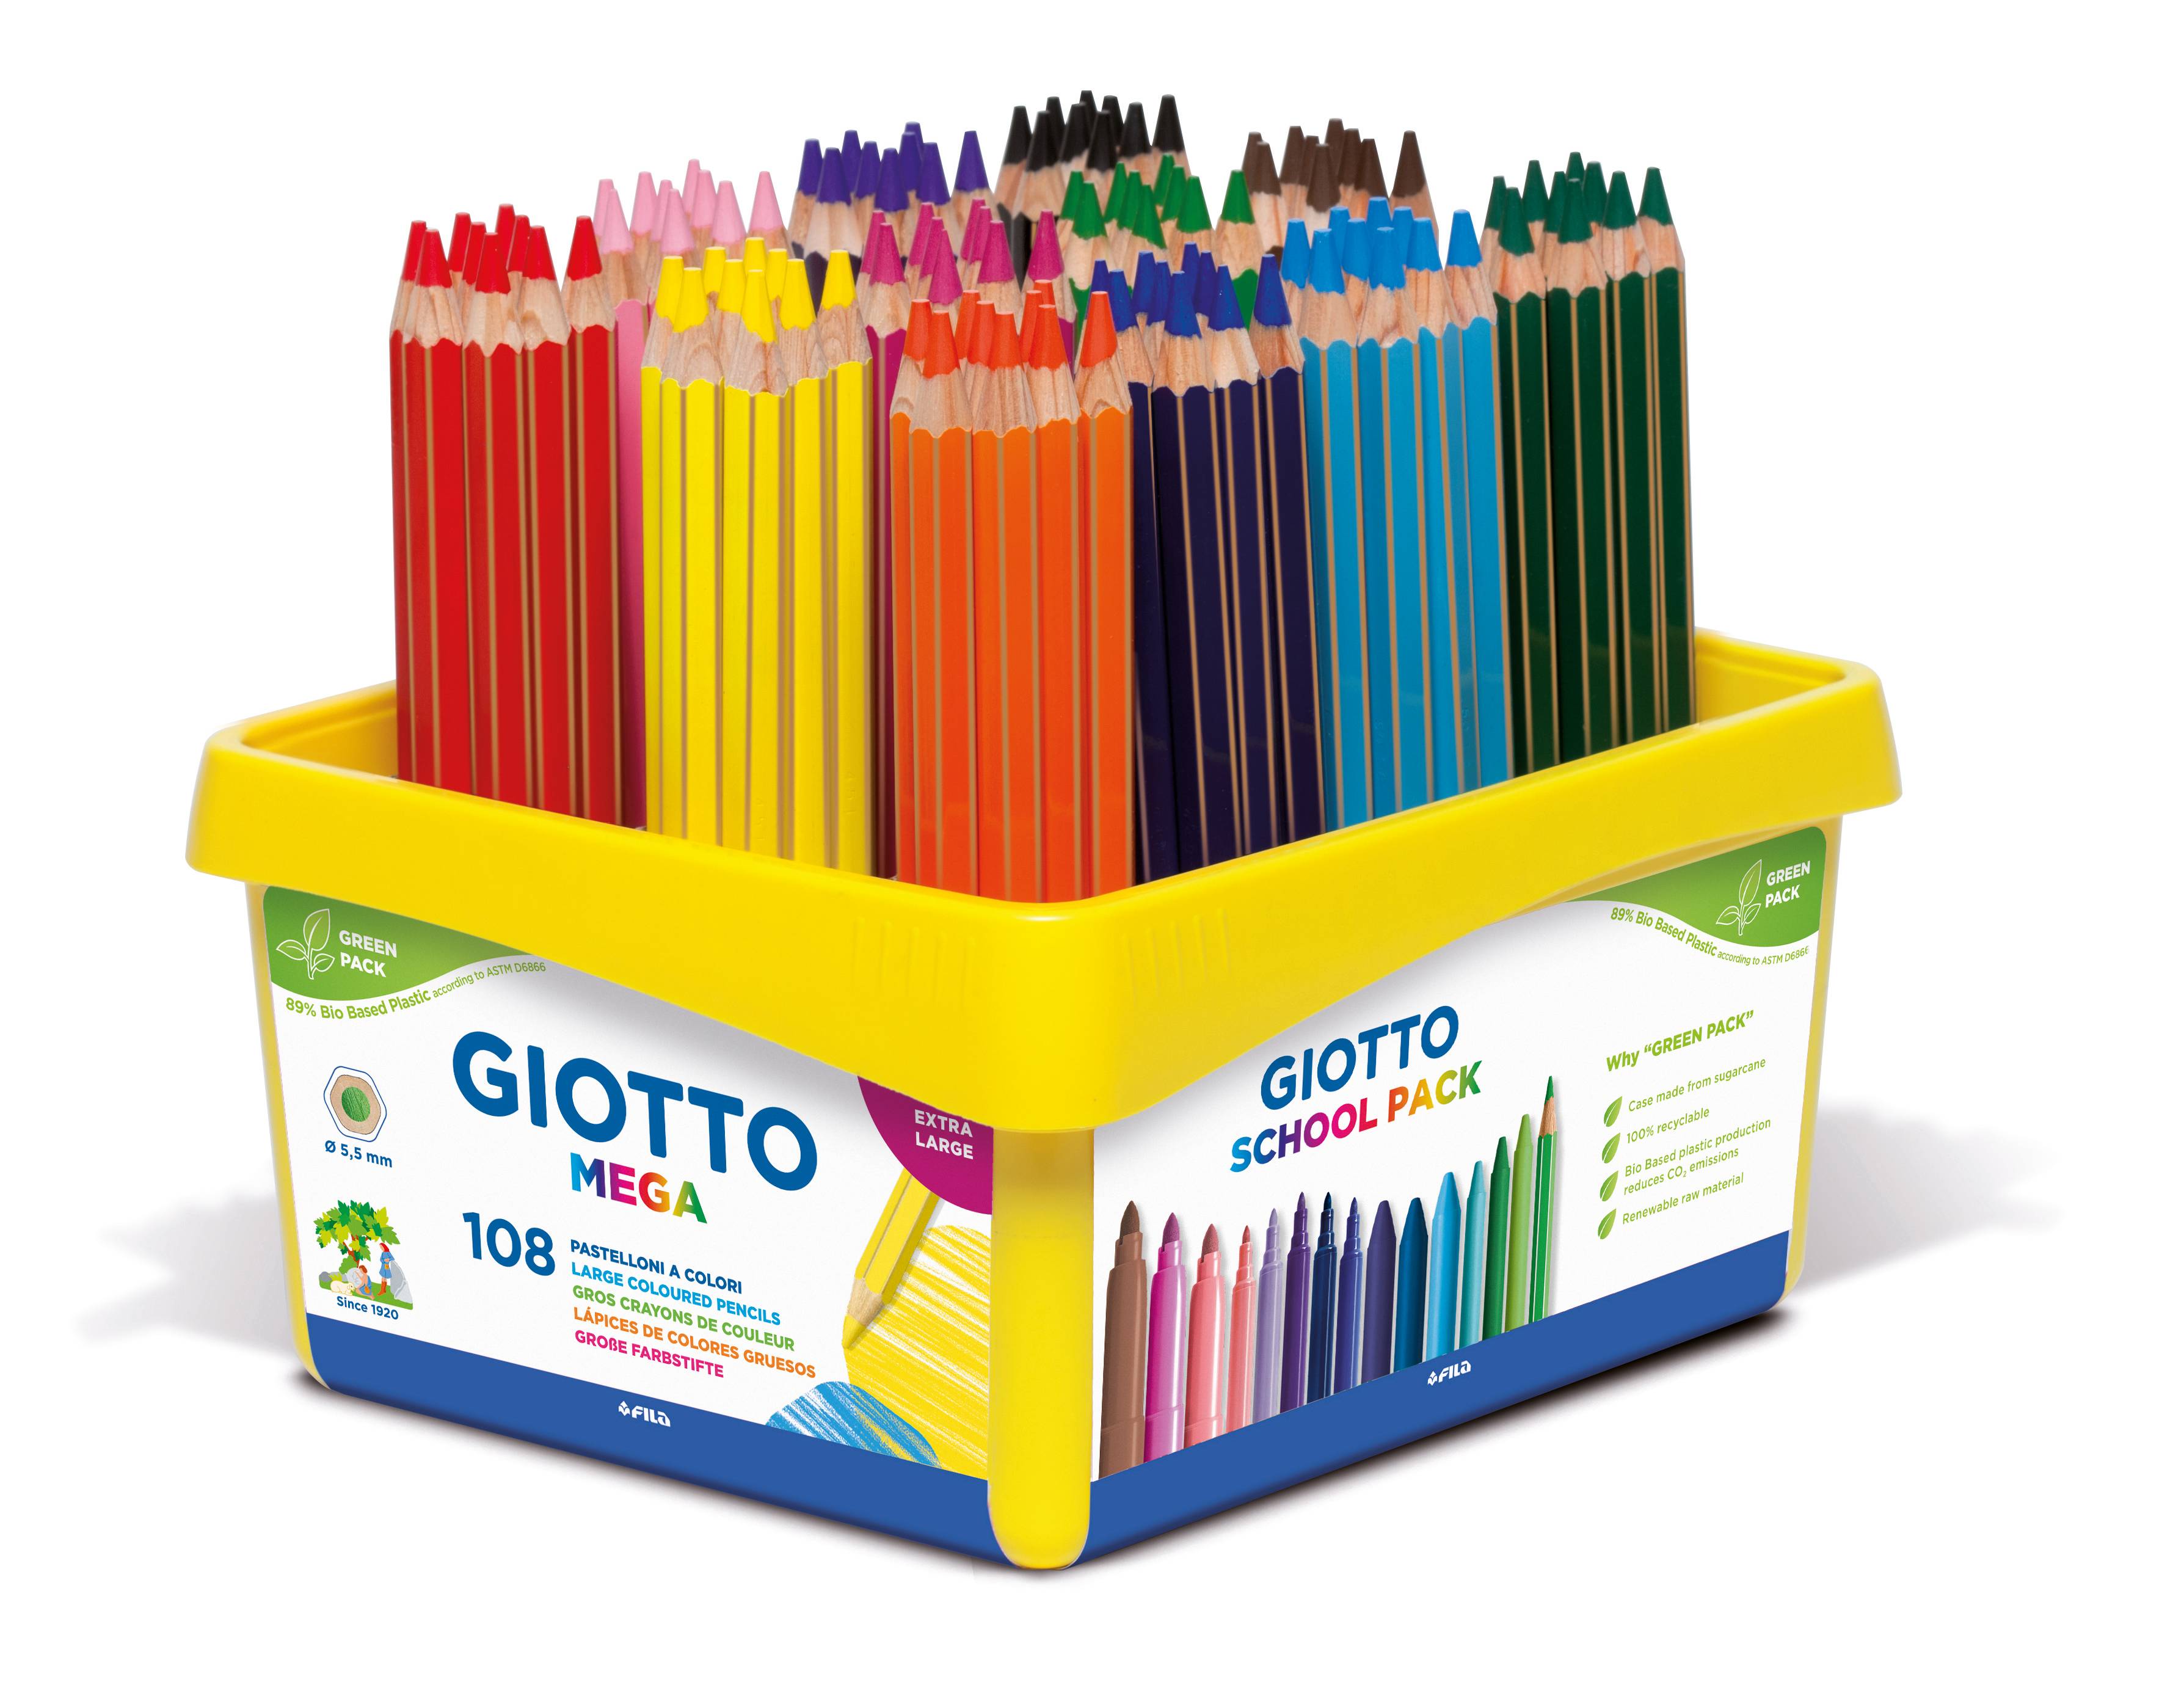 Giotto Mega Ученически комплект цветни моливи 108 бр